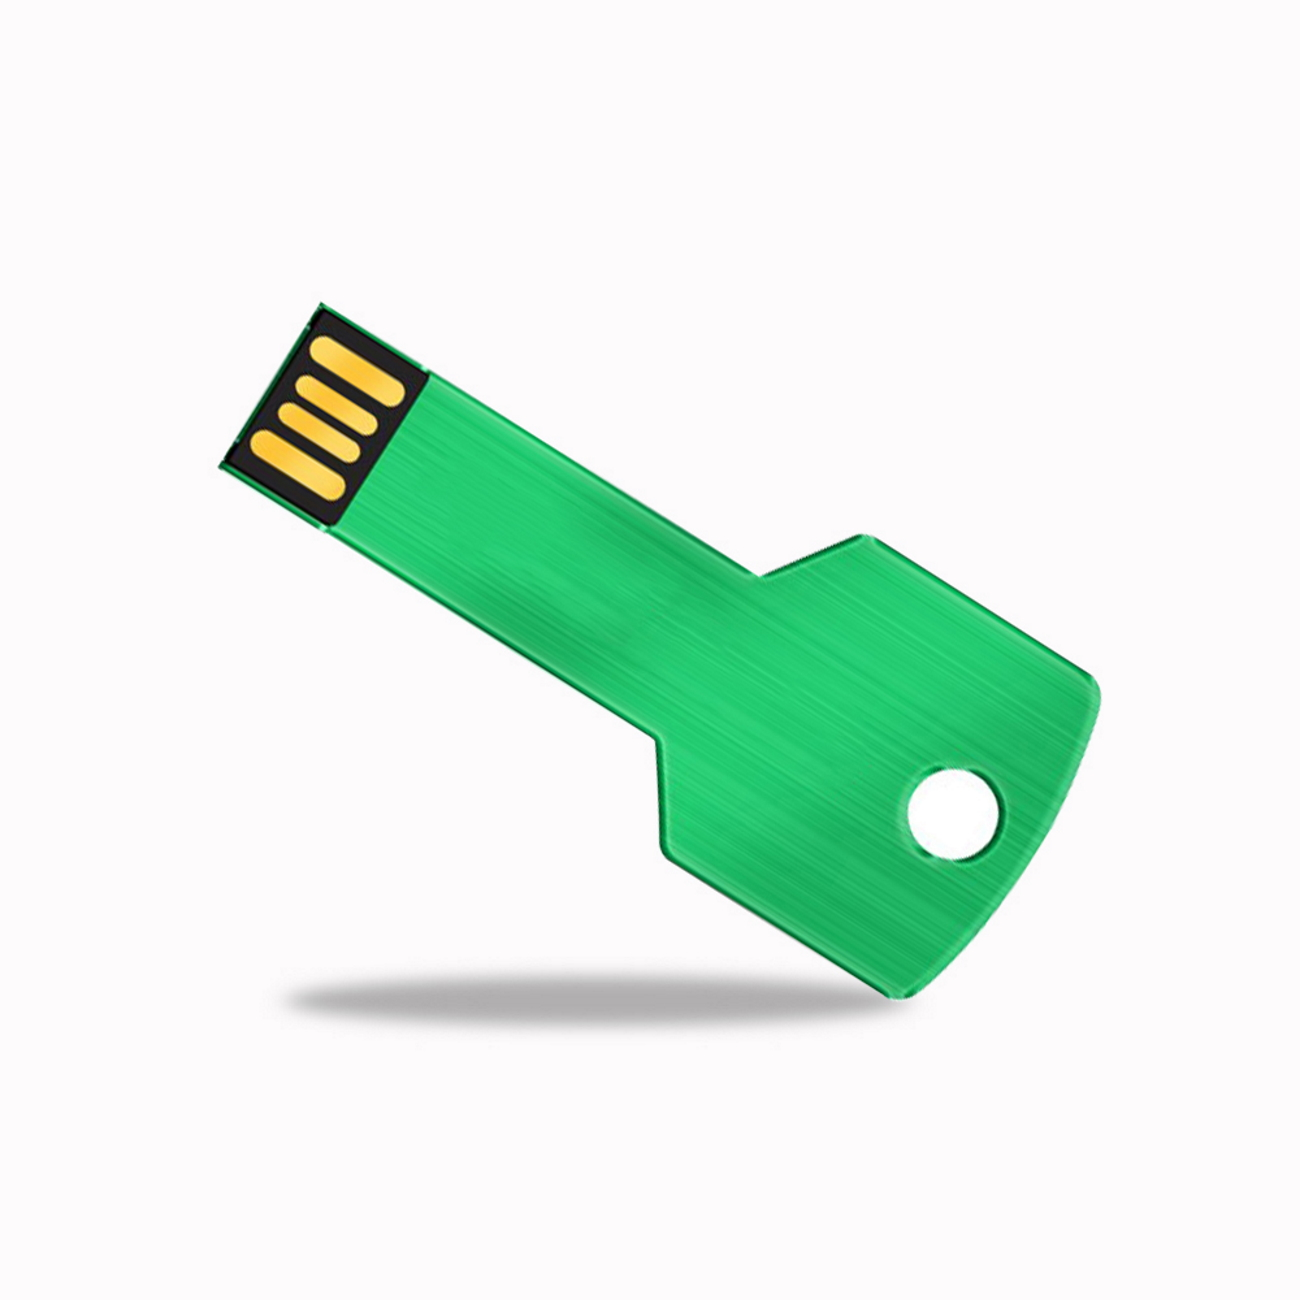 Grün16GB GERMANY USB 16 GB) (Grün, USB-Stick Key